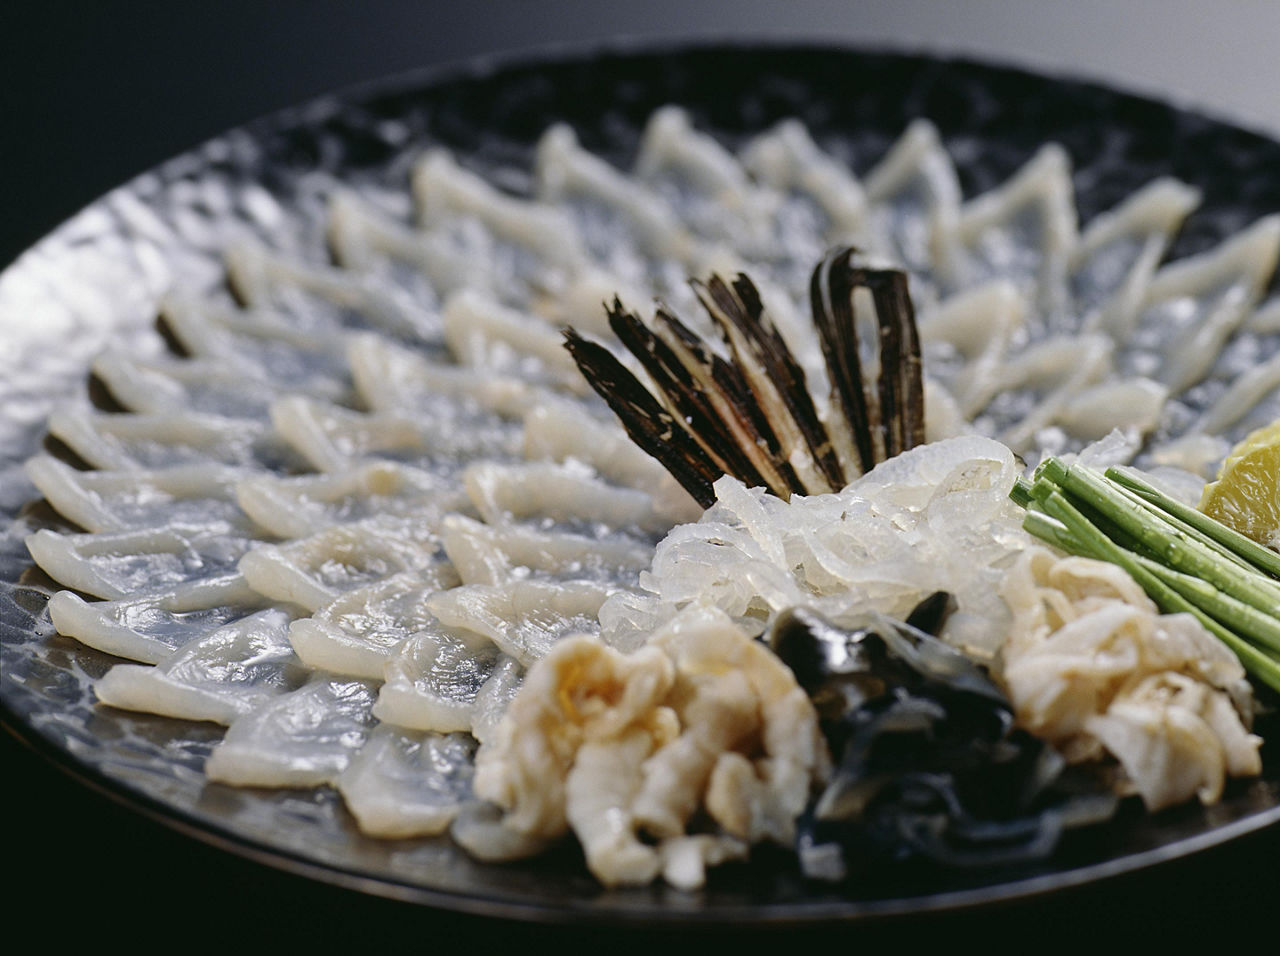 A plate of blowfish sashimi